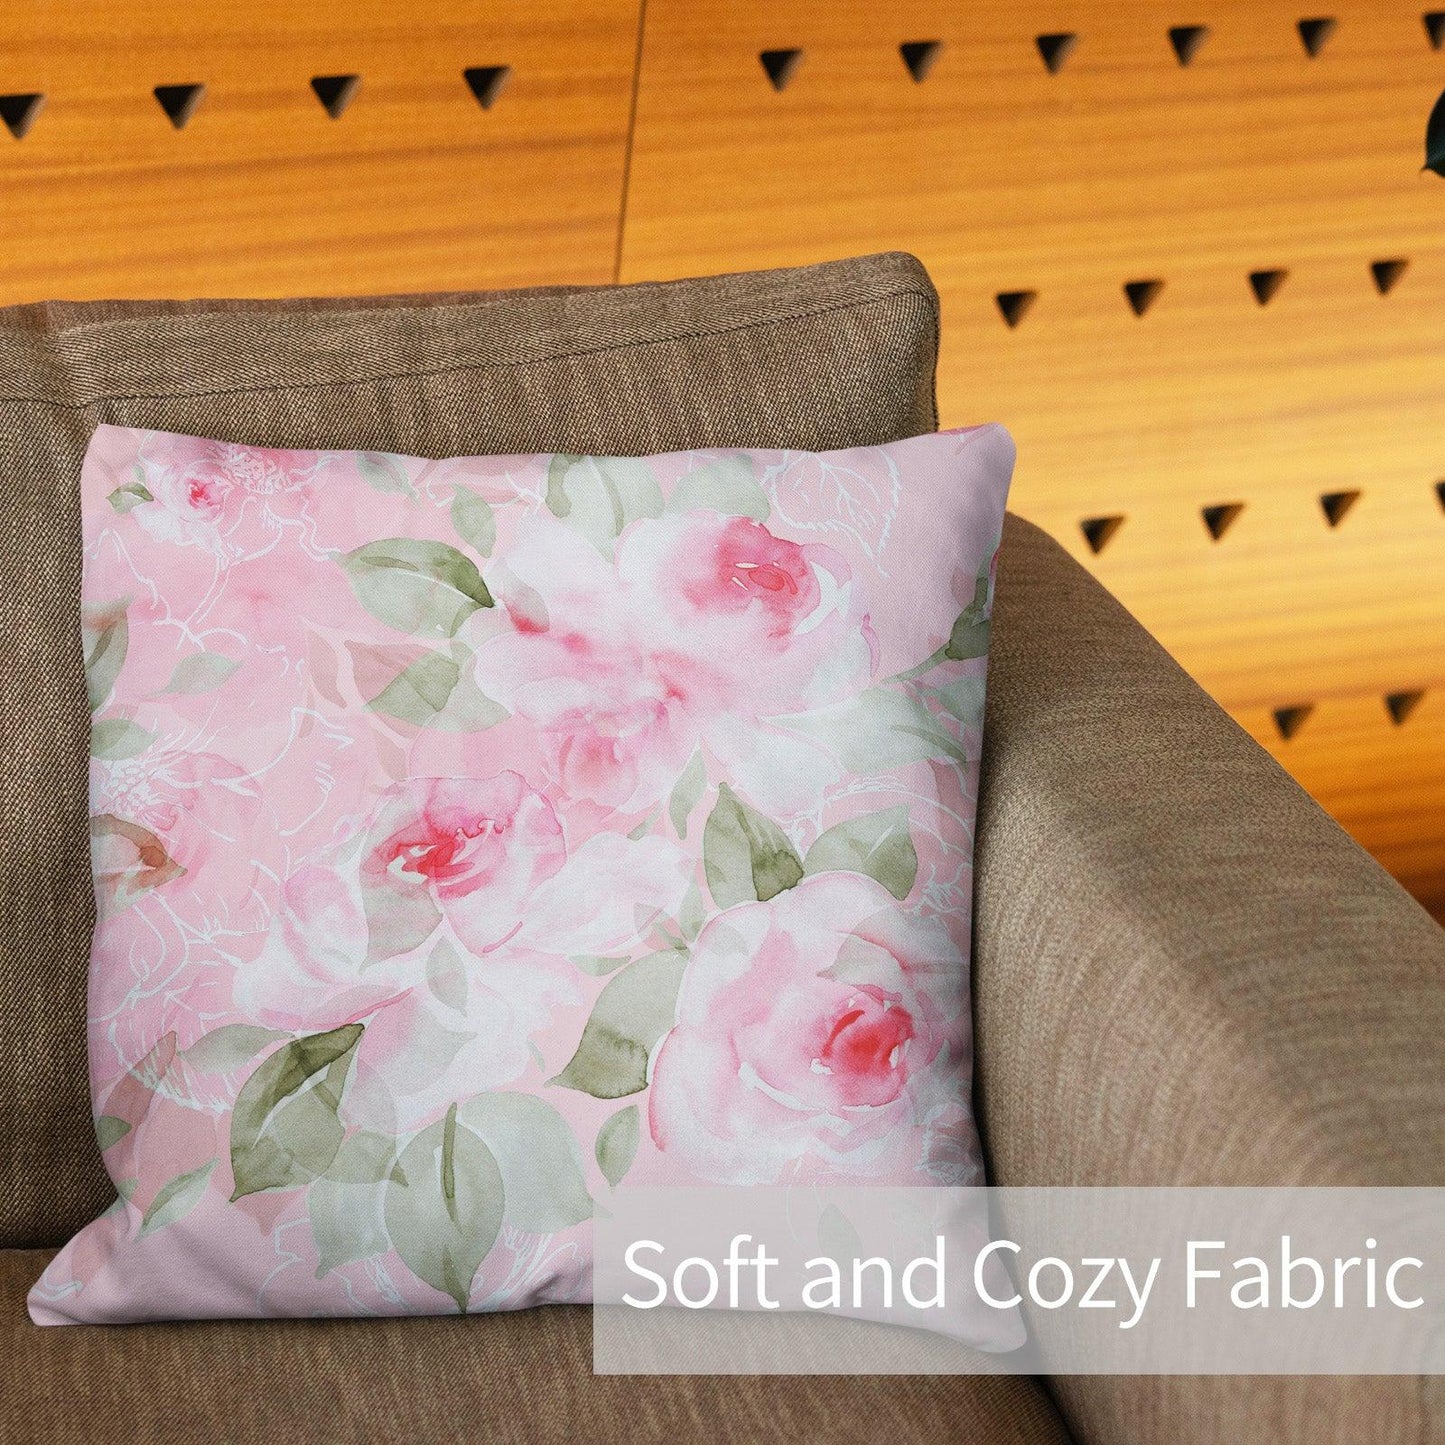 Modern Flower Throw Pillow Covers Pack of 2 18x18 Inch (Cute Pink Roses) - Berkin Arts